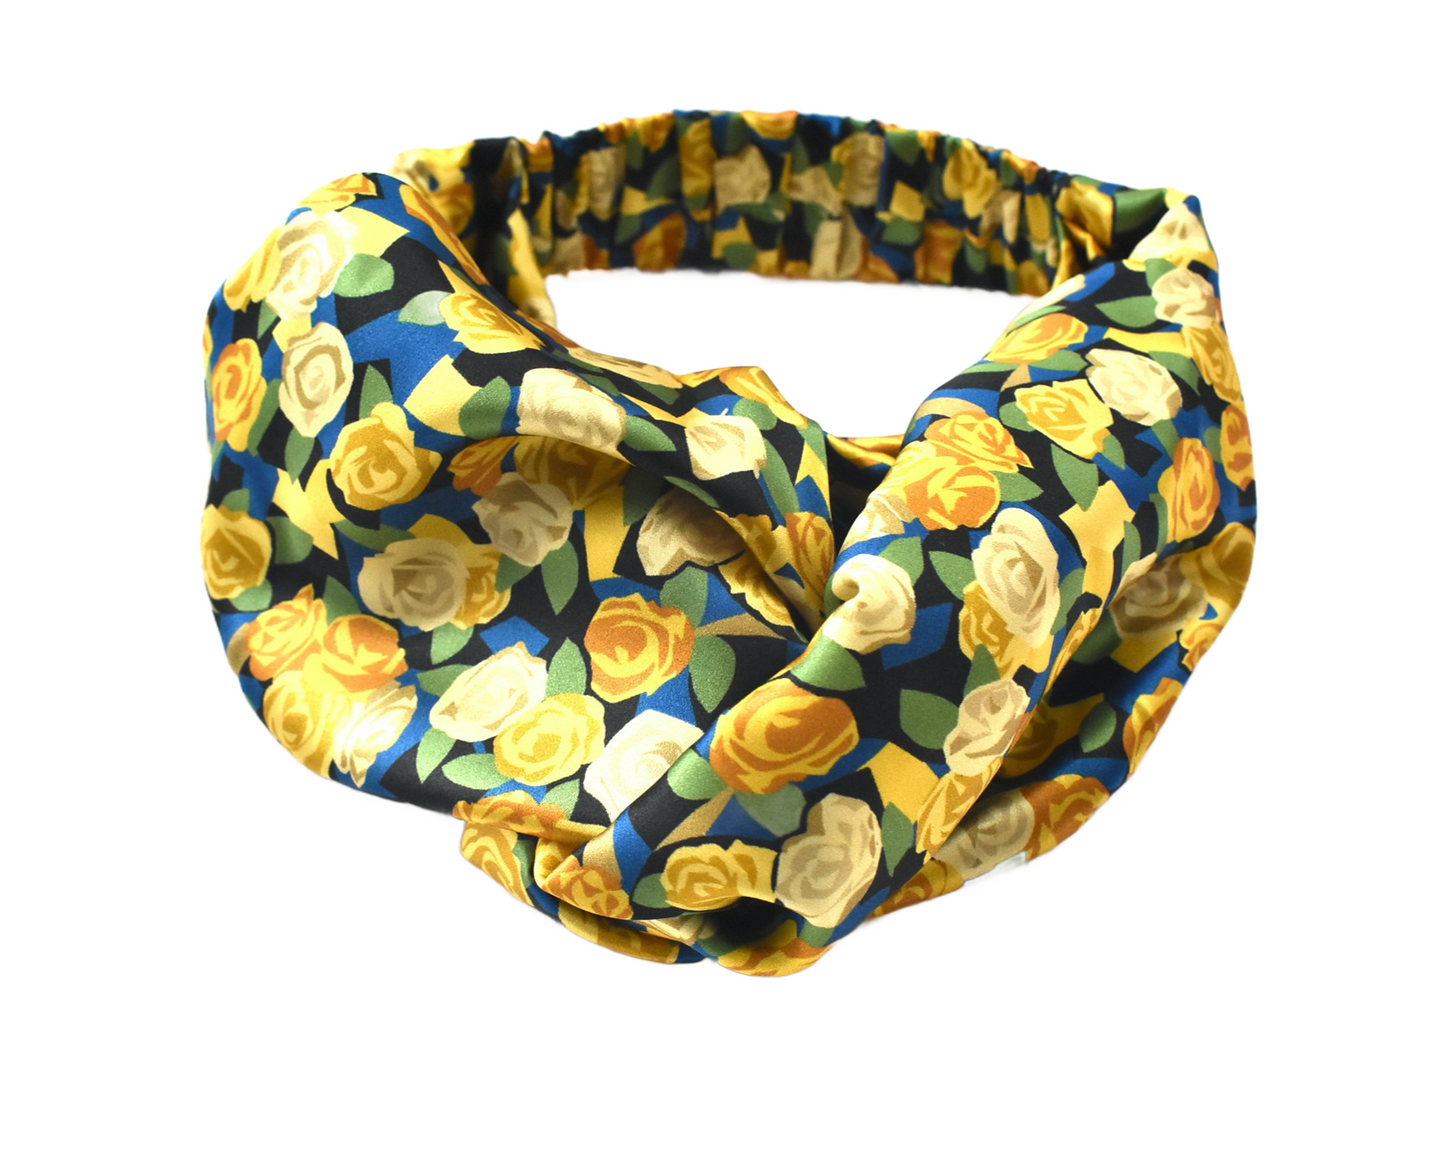 Silk Twisted Turban hairband  in Liberty of London Stone Garden Yellow Roses - 100% Silk-Satin